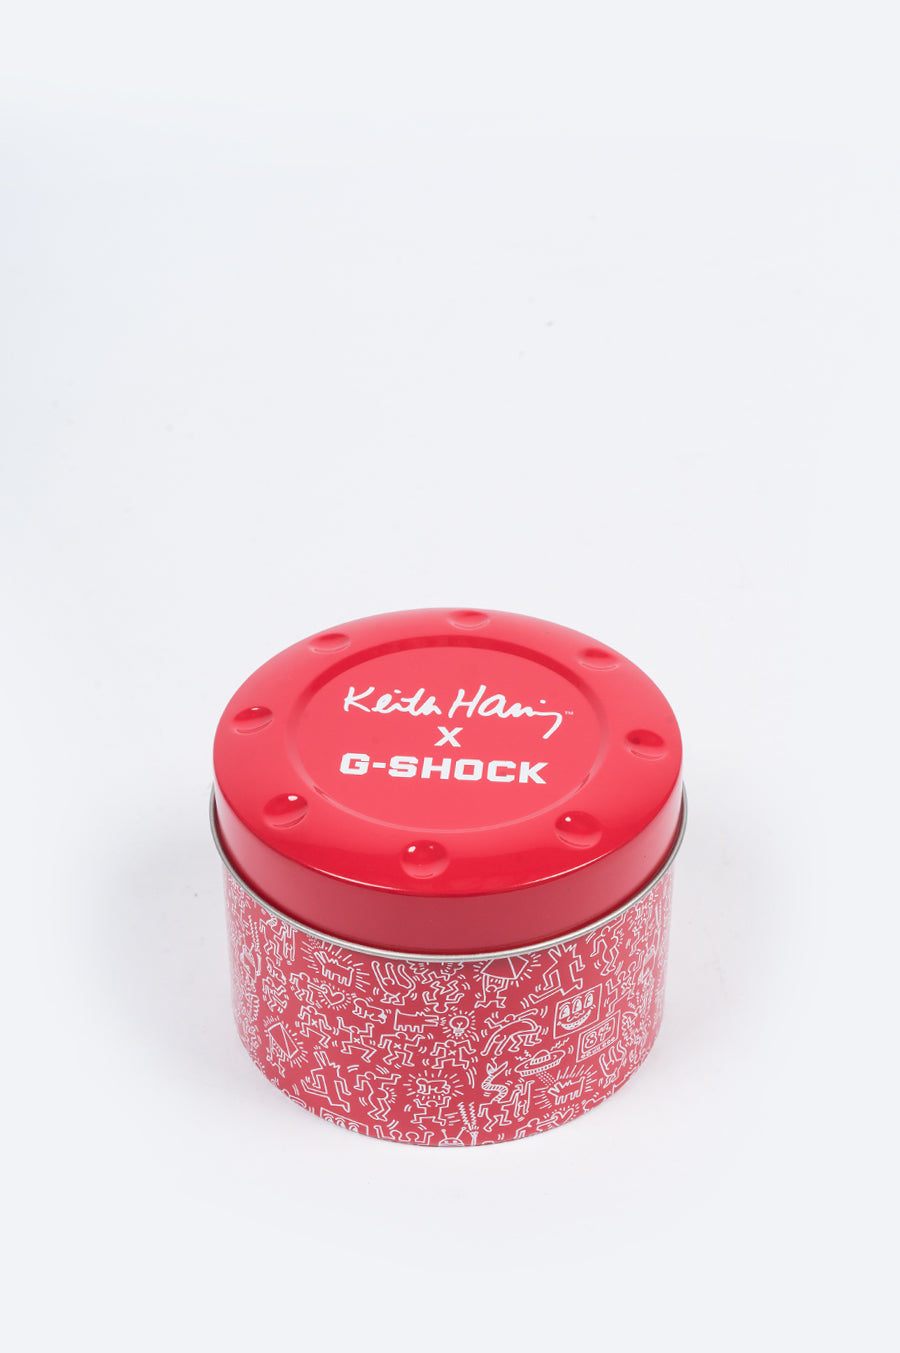 G-SHOCK X KEITH HARING DW-5600 RED | Keith Haring Gshock | ihrm.or.ke